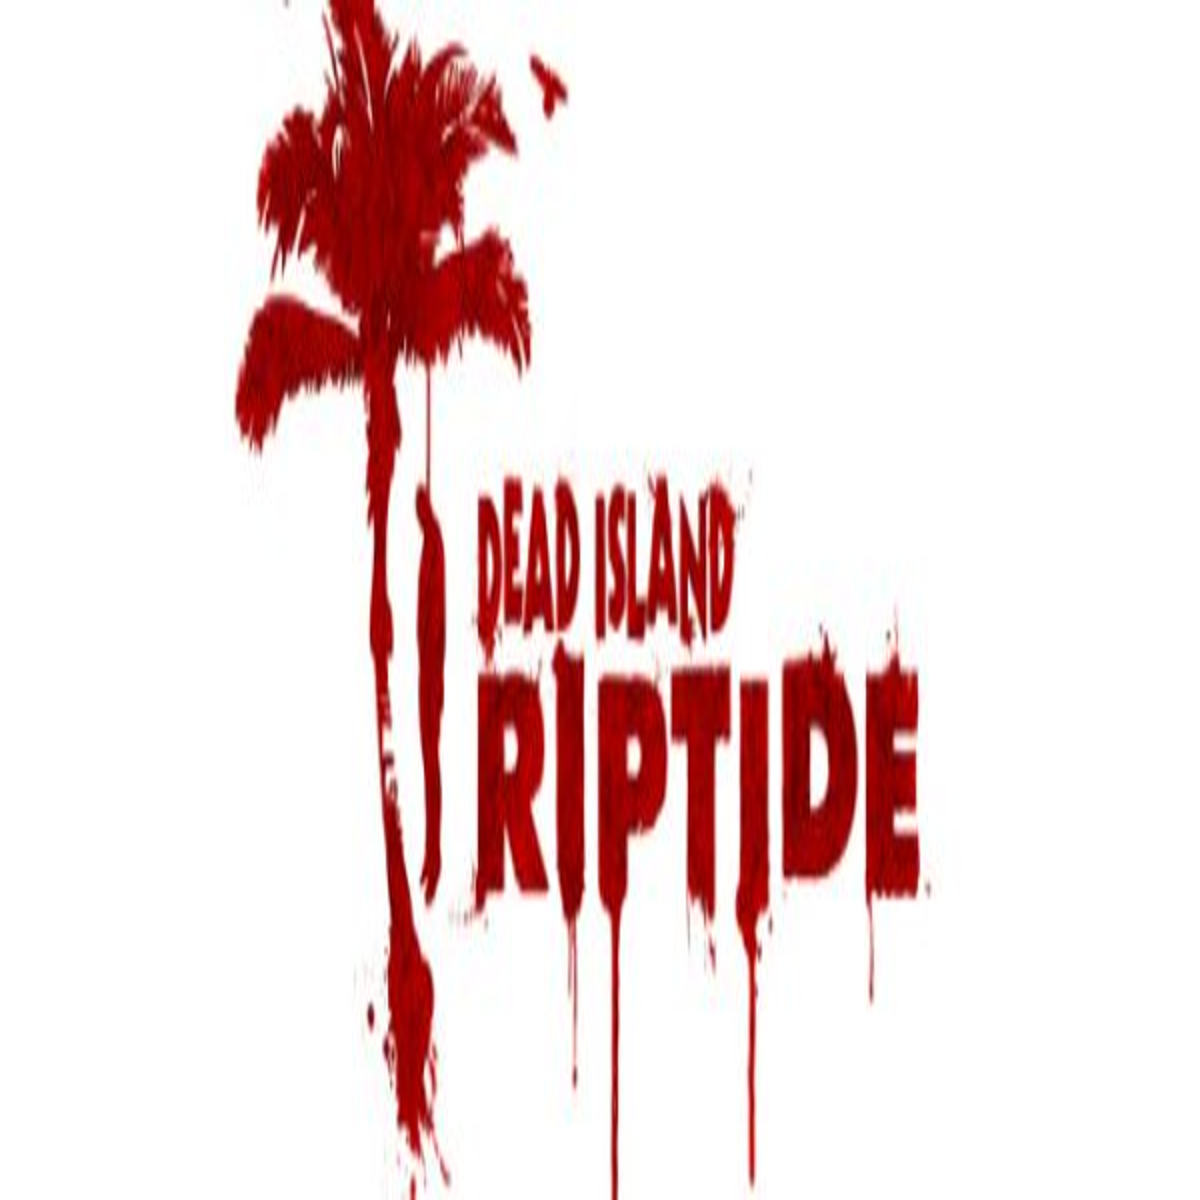 Dead Island – Riptide